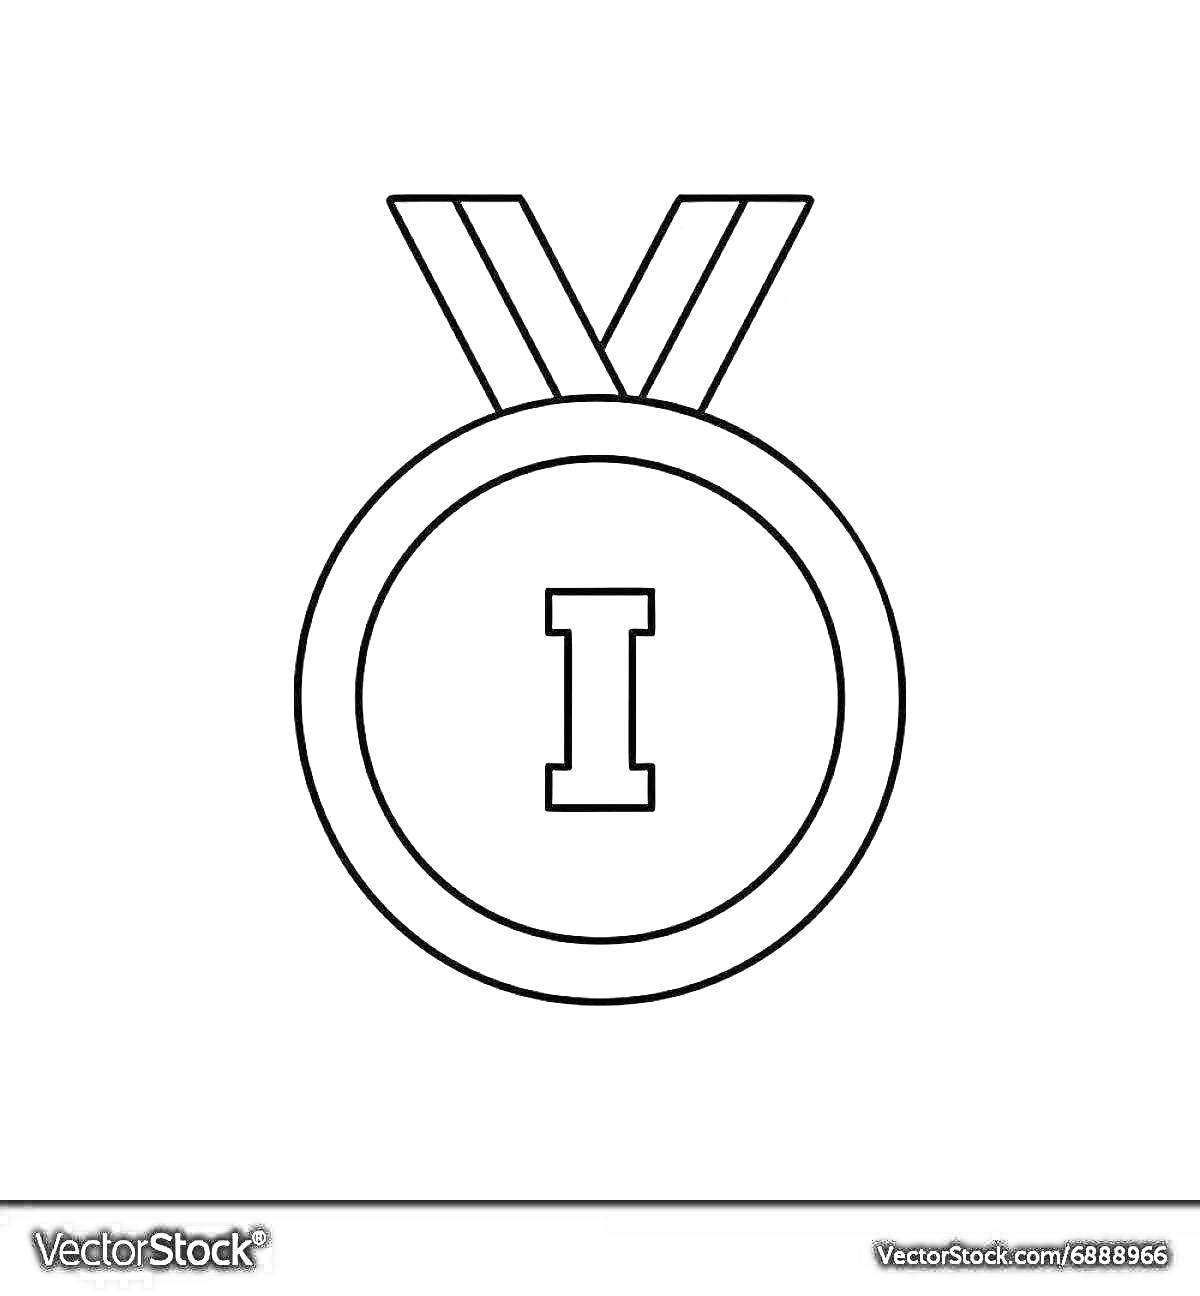 На раскраске изображено: Медаль, Первое место, Победа, Награда, Лента, Спорт